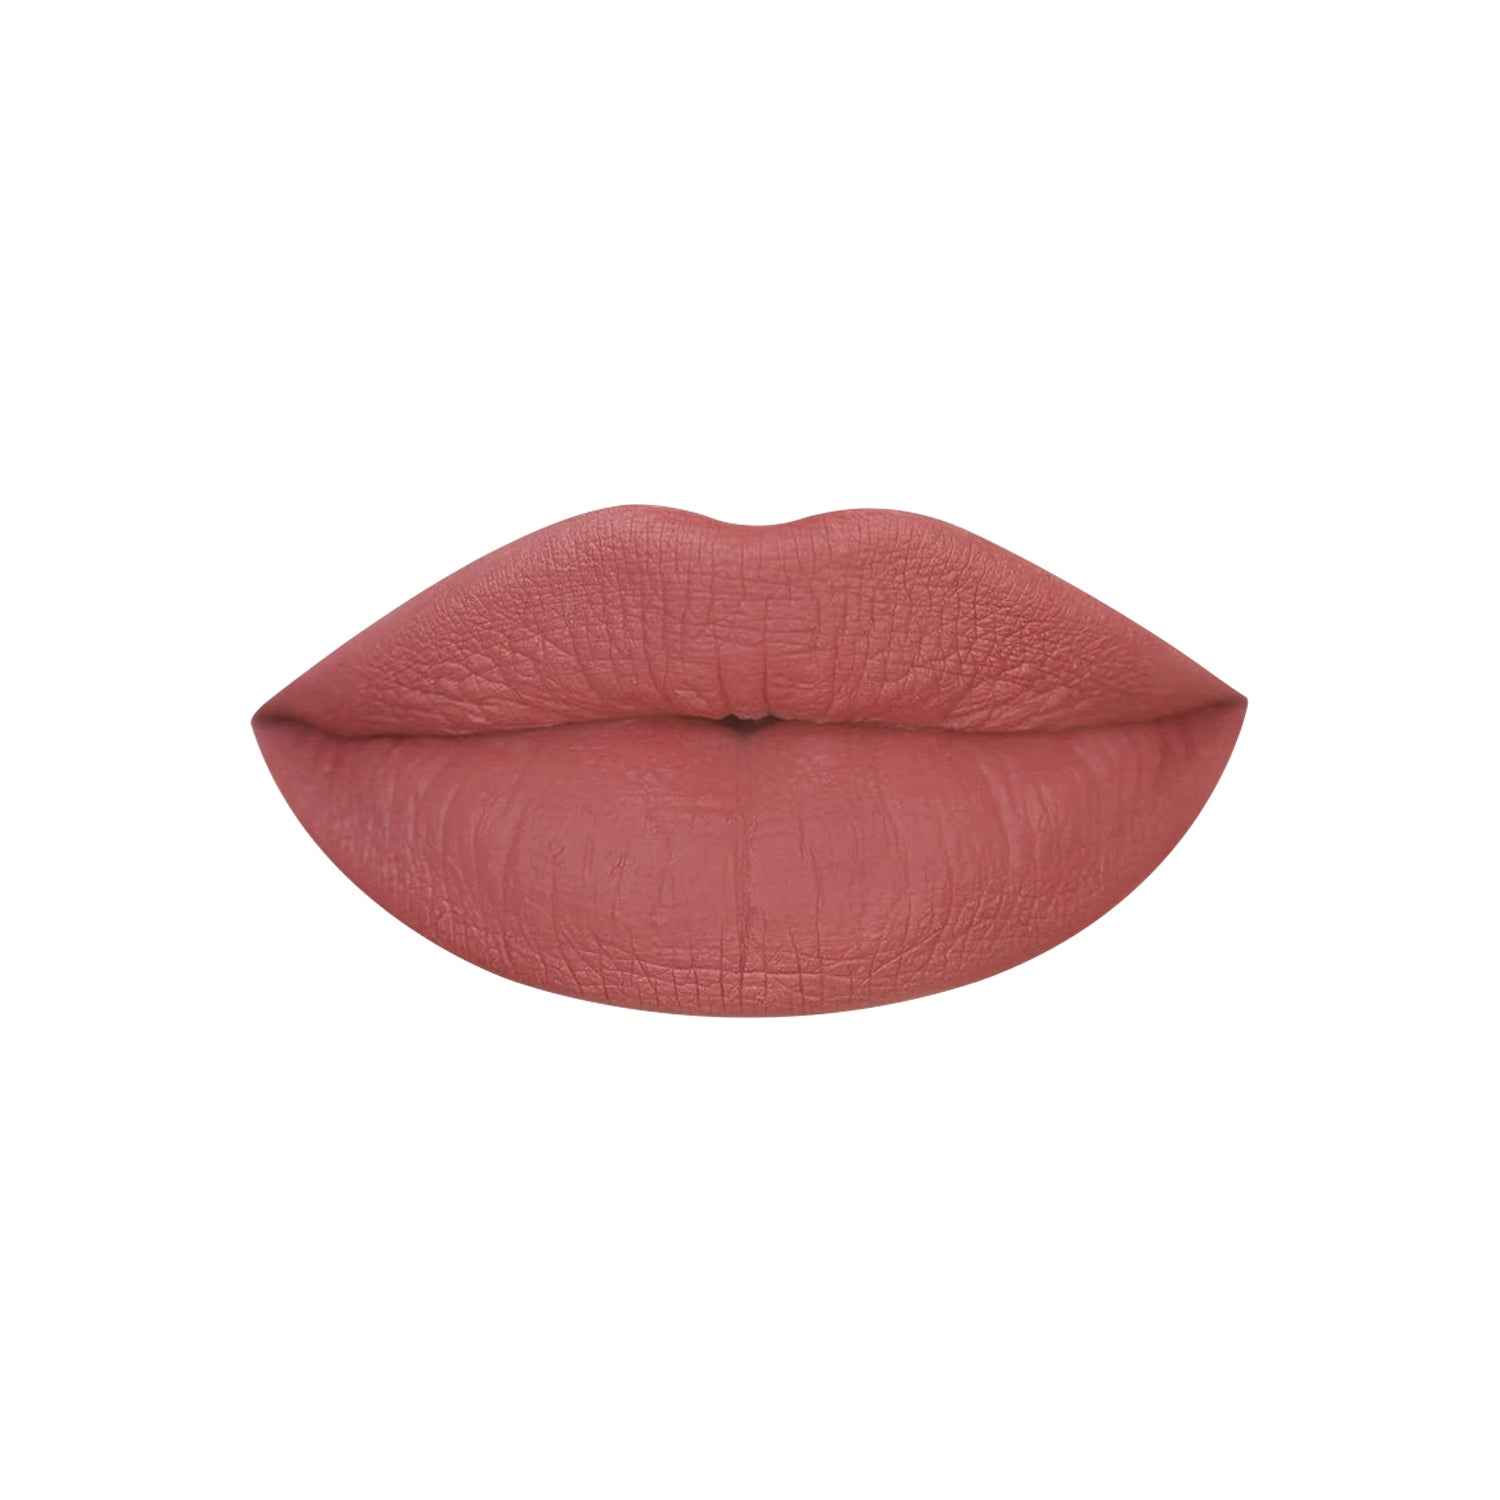 PAC Cosmetics Intimatte Lipstick (4g) #Color_Urban Wild